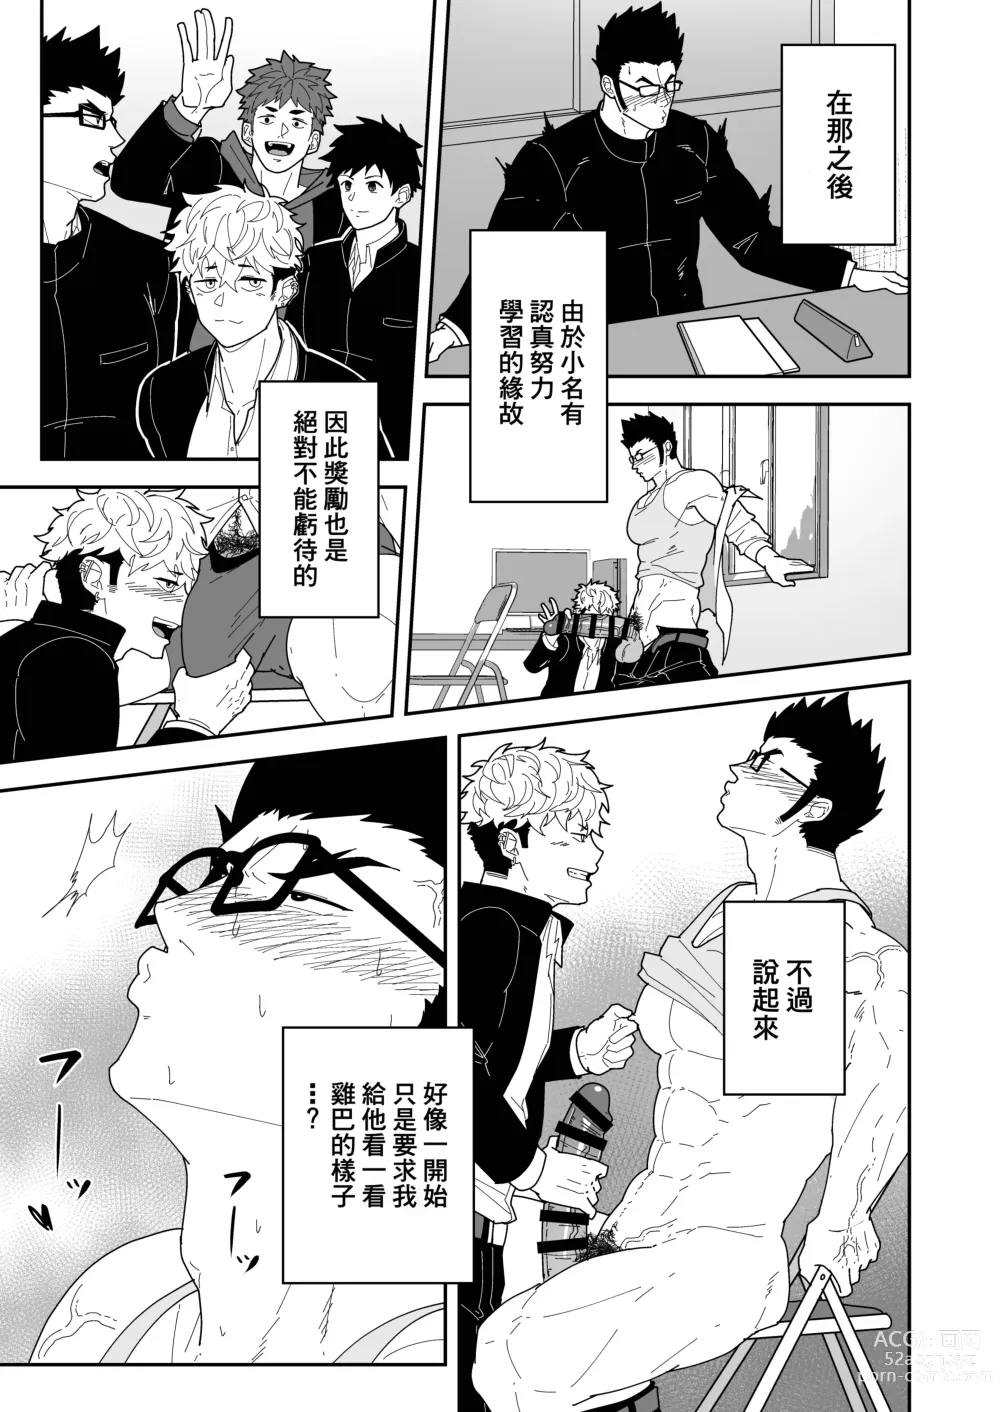 Page 7 of doujinshi 夏日变形记